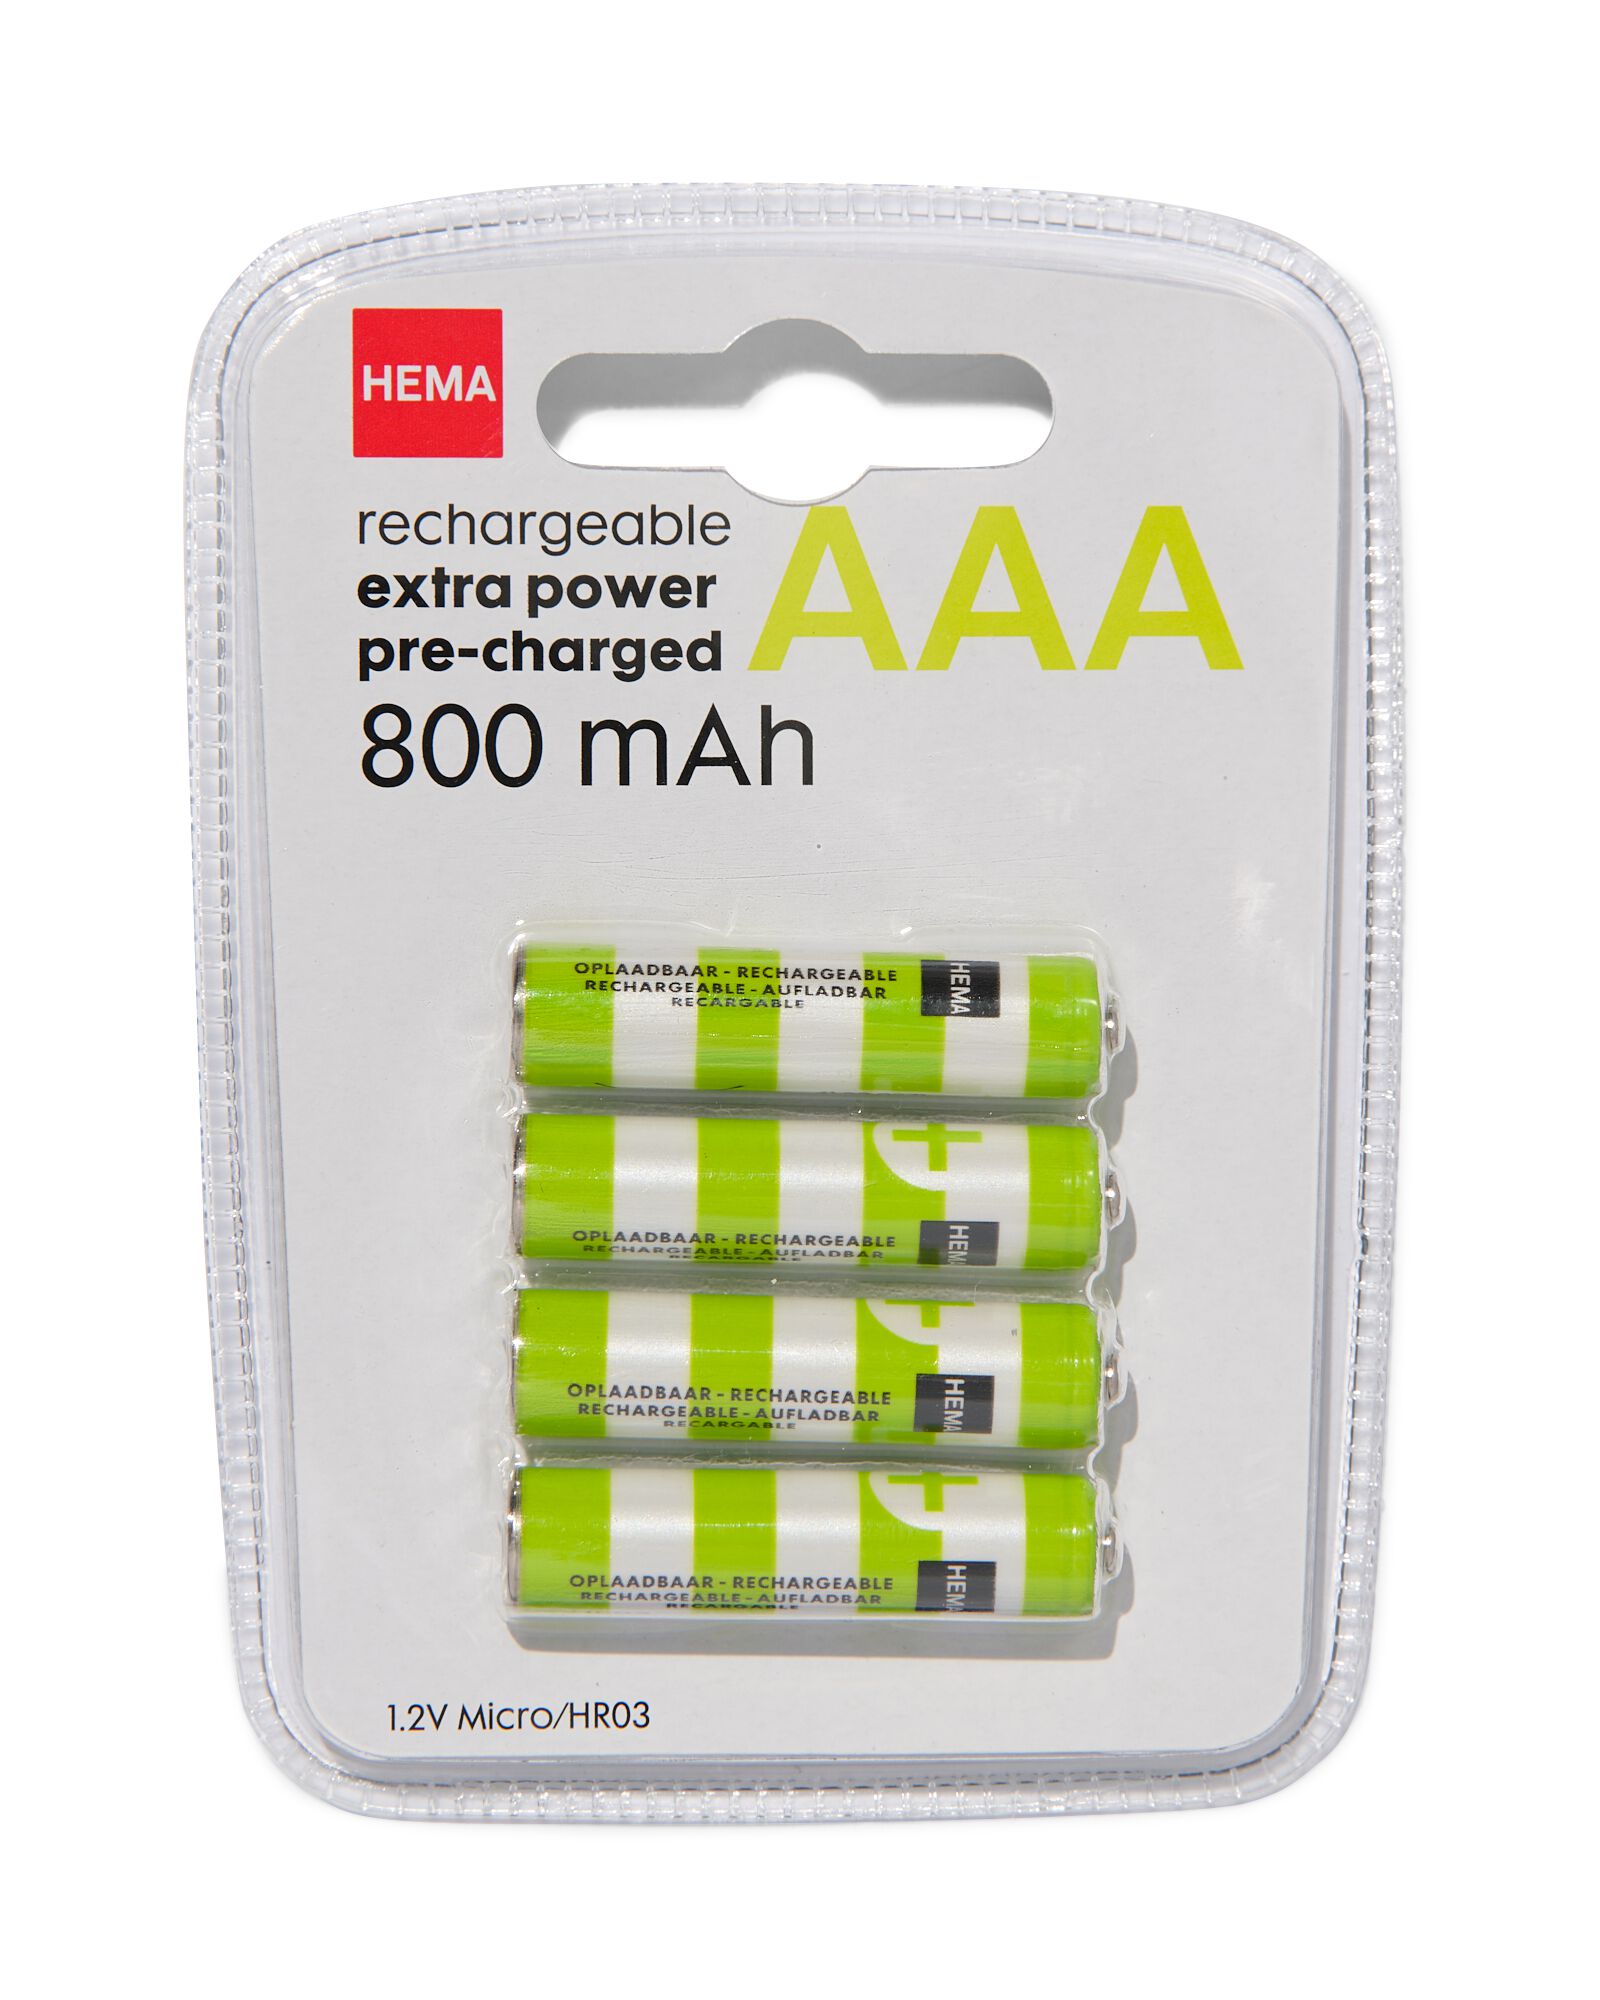 oplaadbare AAA batterijen 800mAh - 4 stuks - HEMA